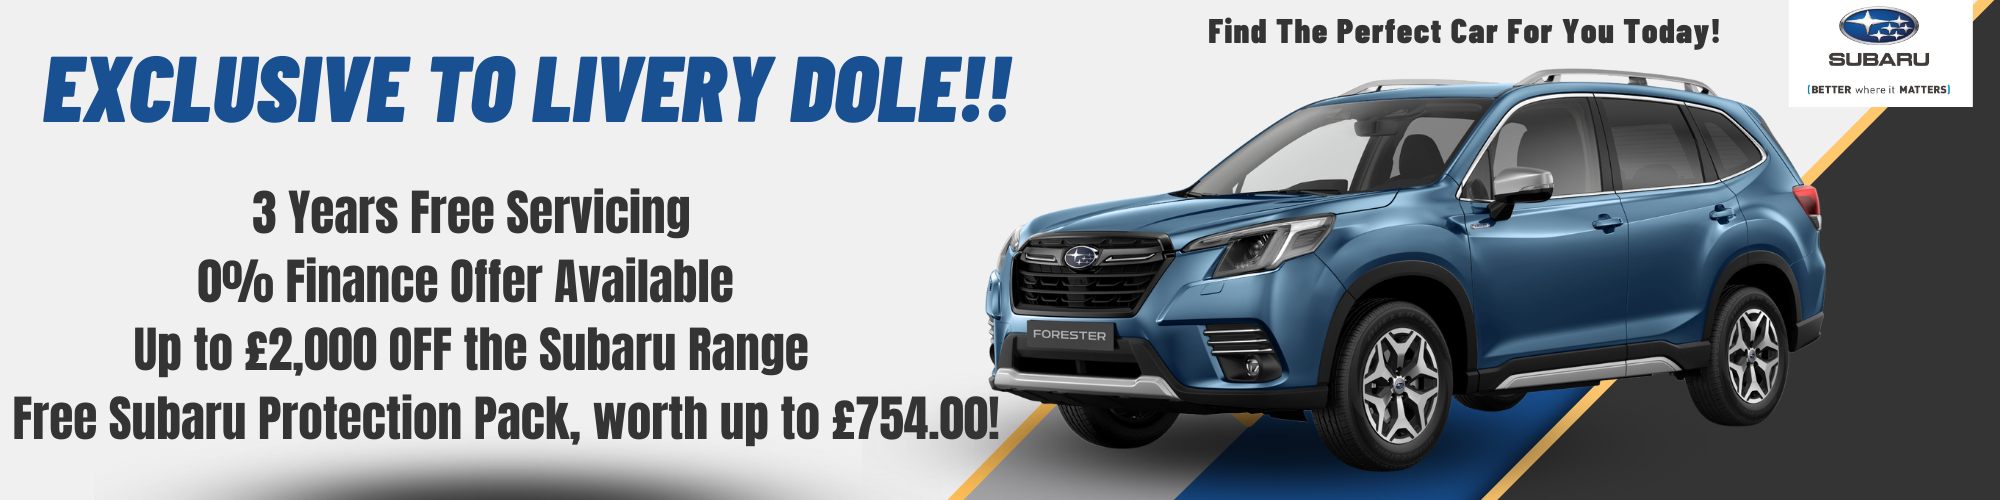 New Subaru Cars for sale at Livery Dole Ltd